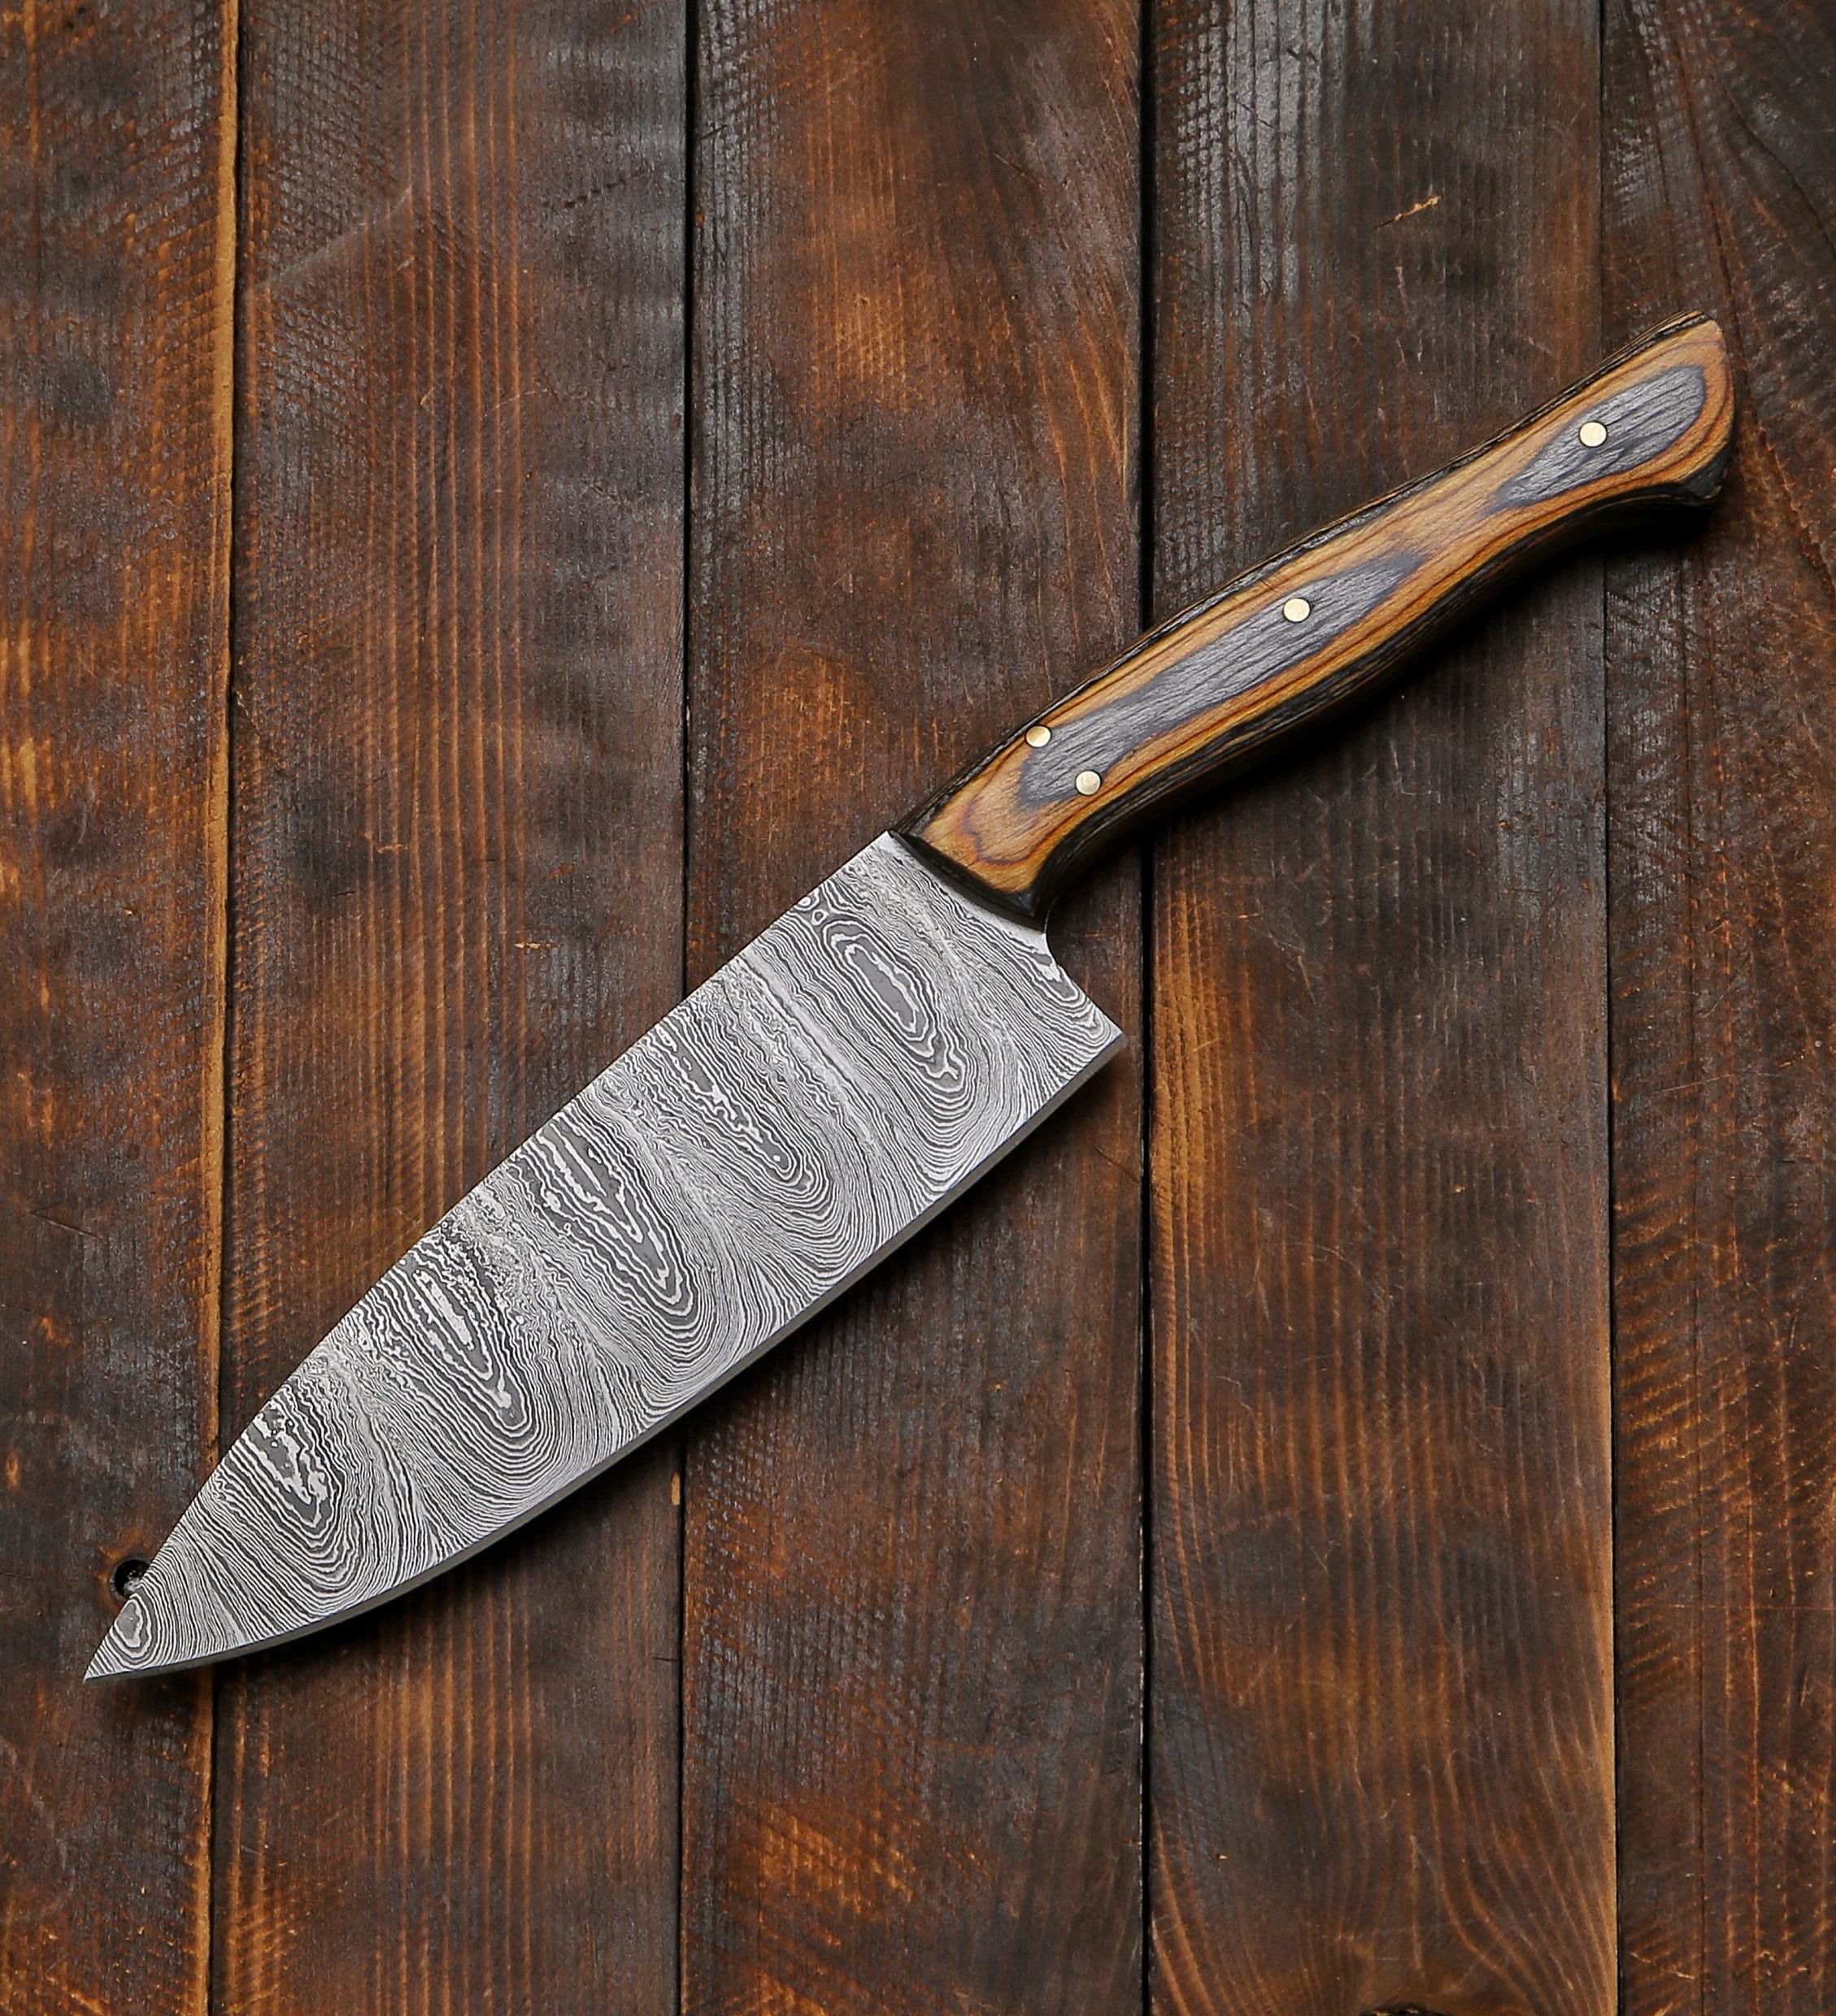 CUSTOM HANDMADE FORGED DAMASCUS STEEL CHEF KNIFE KITCHEN KNIFE - 1349